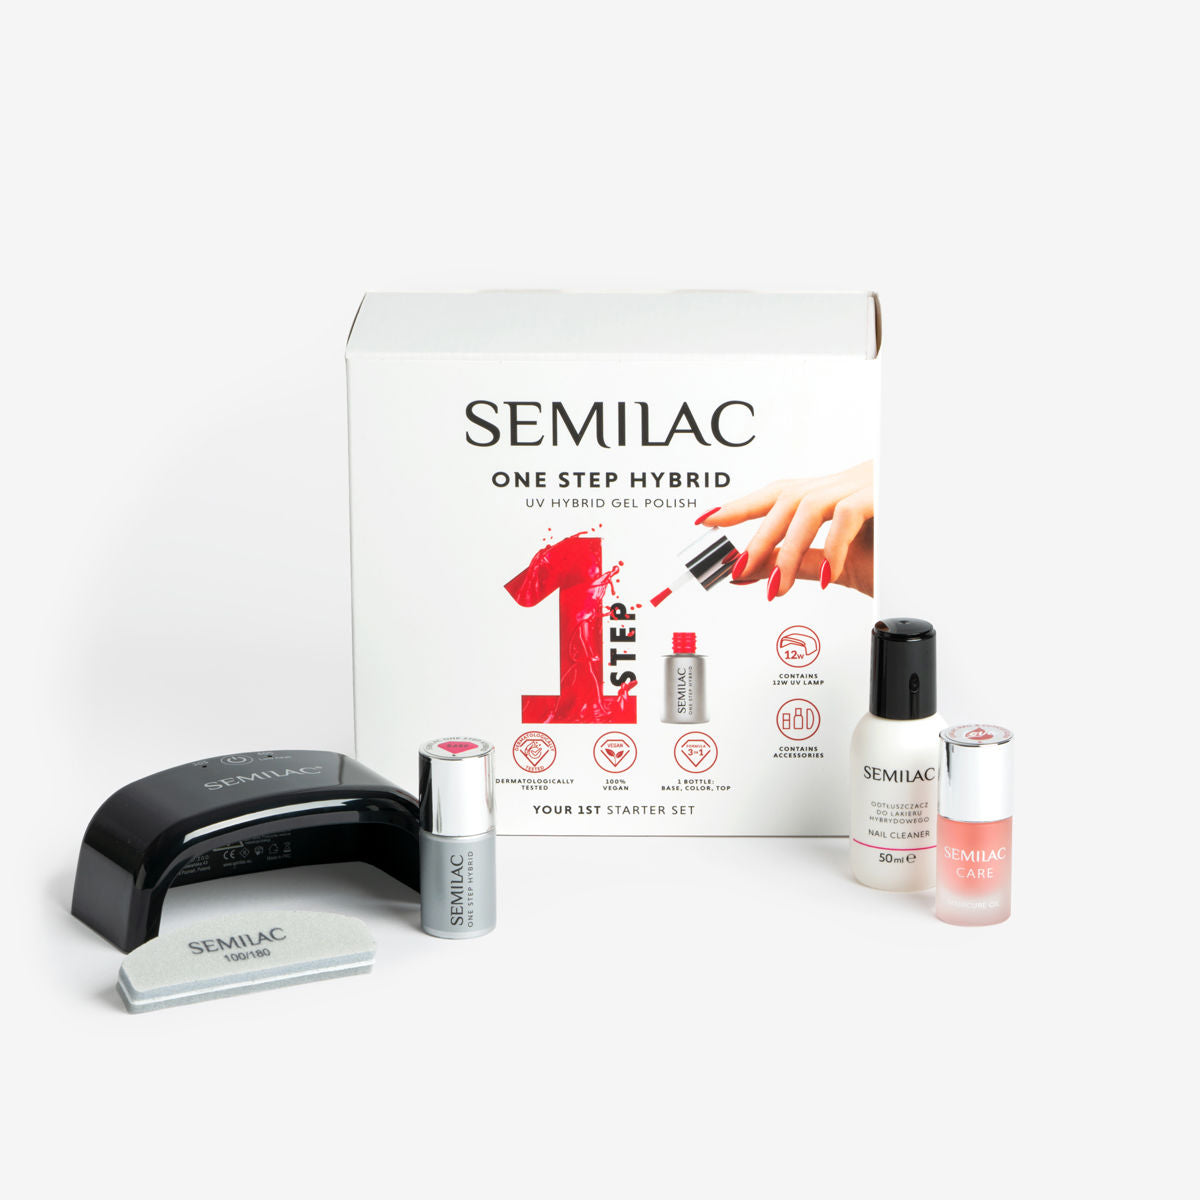 Semilac One Step Hybrid Gel Polish CUSTOMISED Starter Set 12W Lamp - Semilac UK